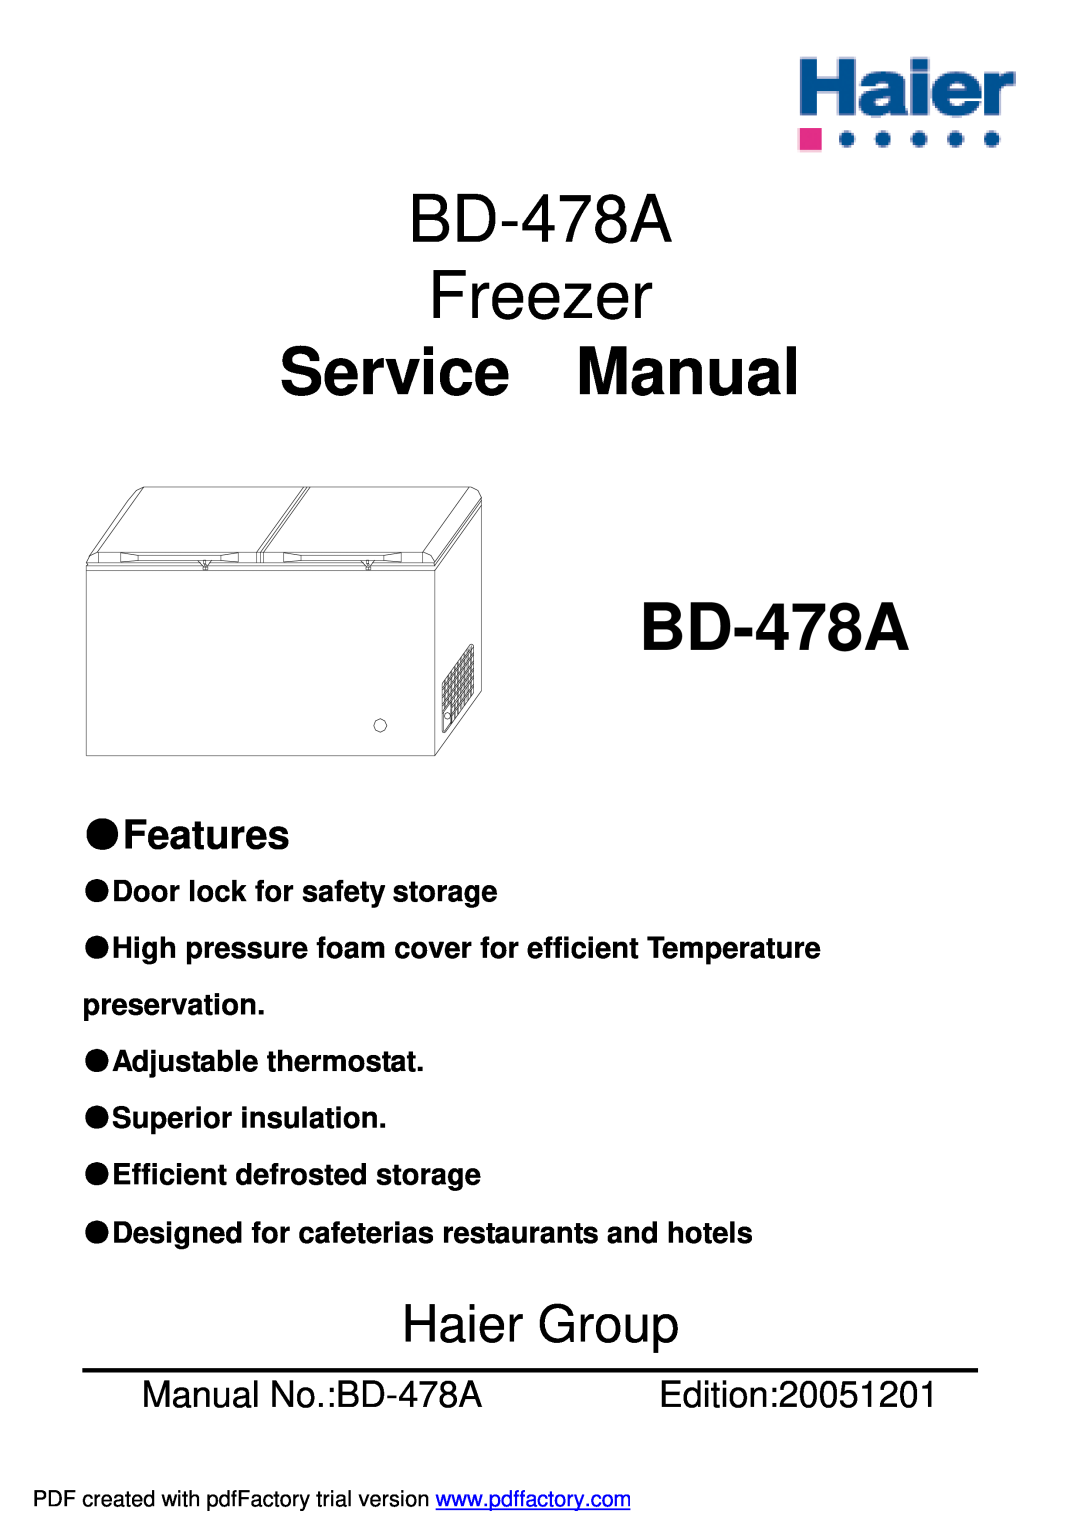 Haier service manual Features, BD-478A Freezer, Haier Group, Manual No.BD-478A, Edition20051201 